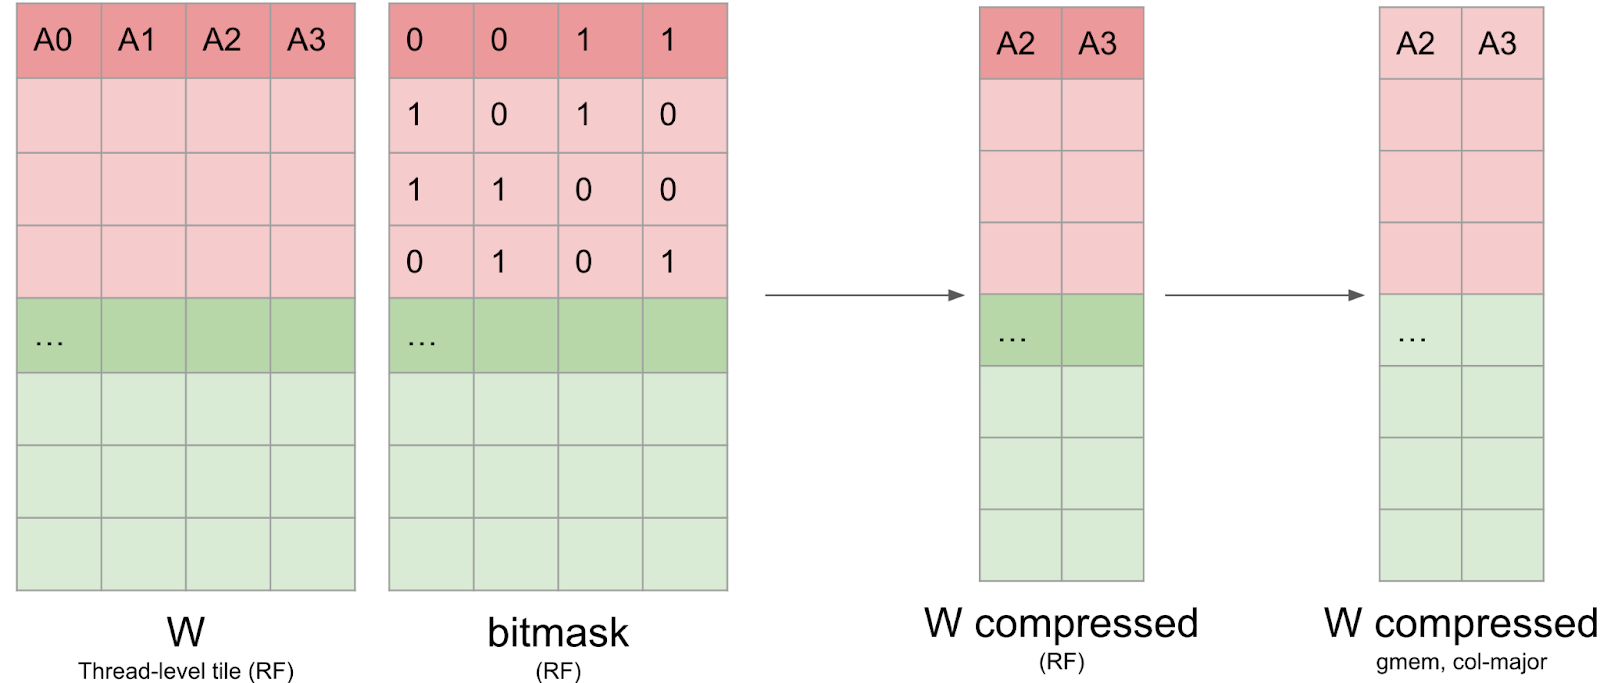 compressed matrix to global memory in Column-Major format